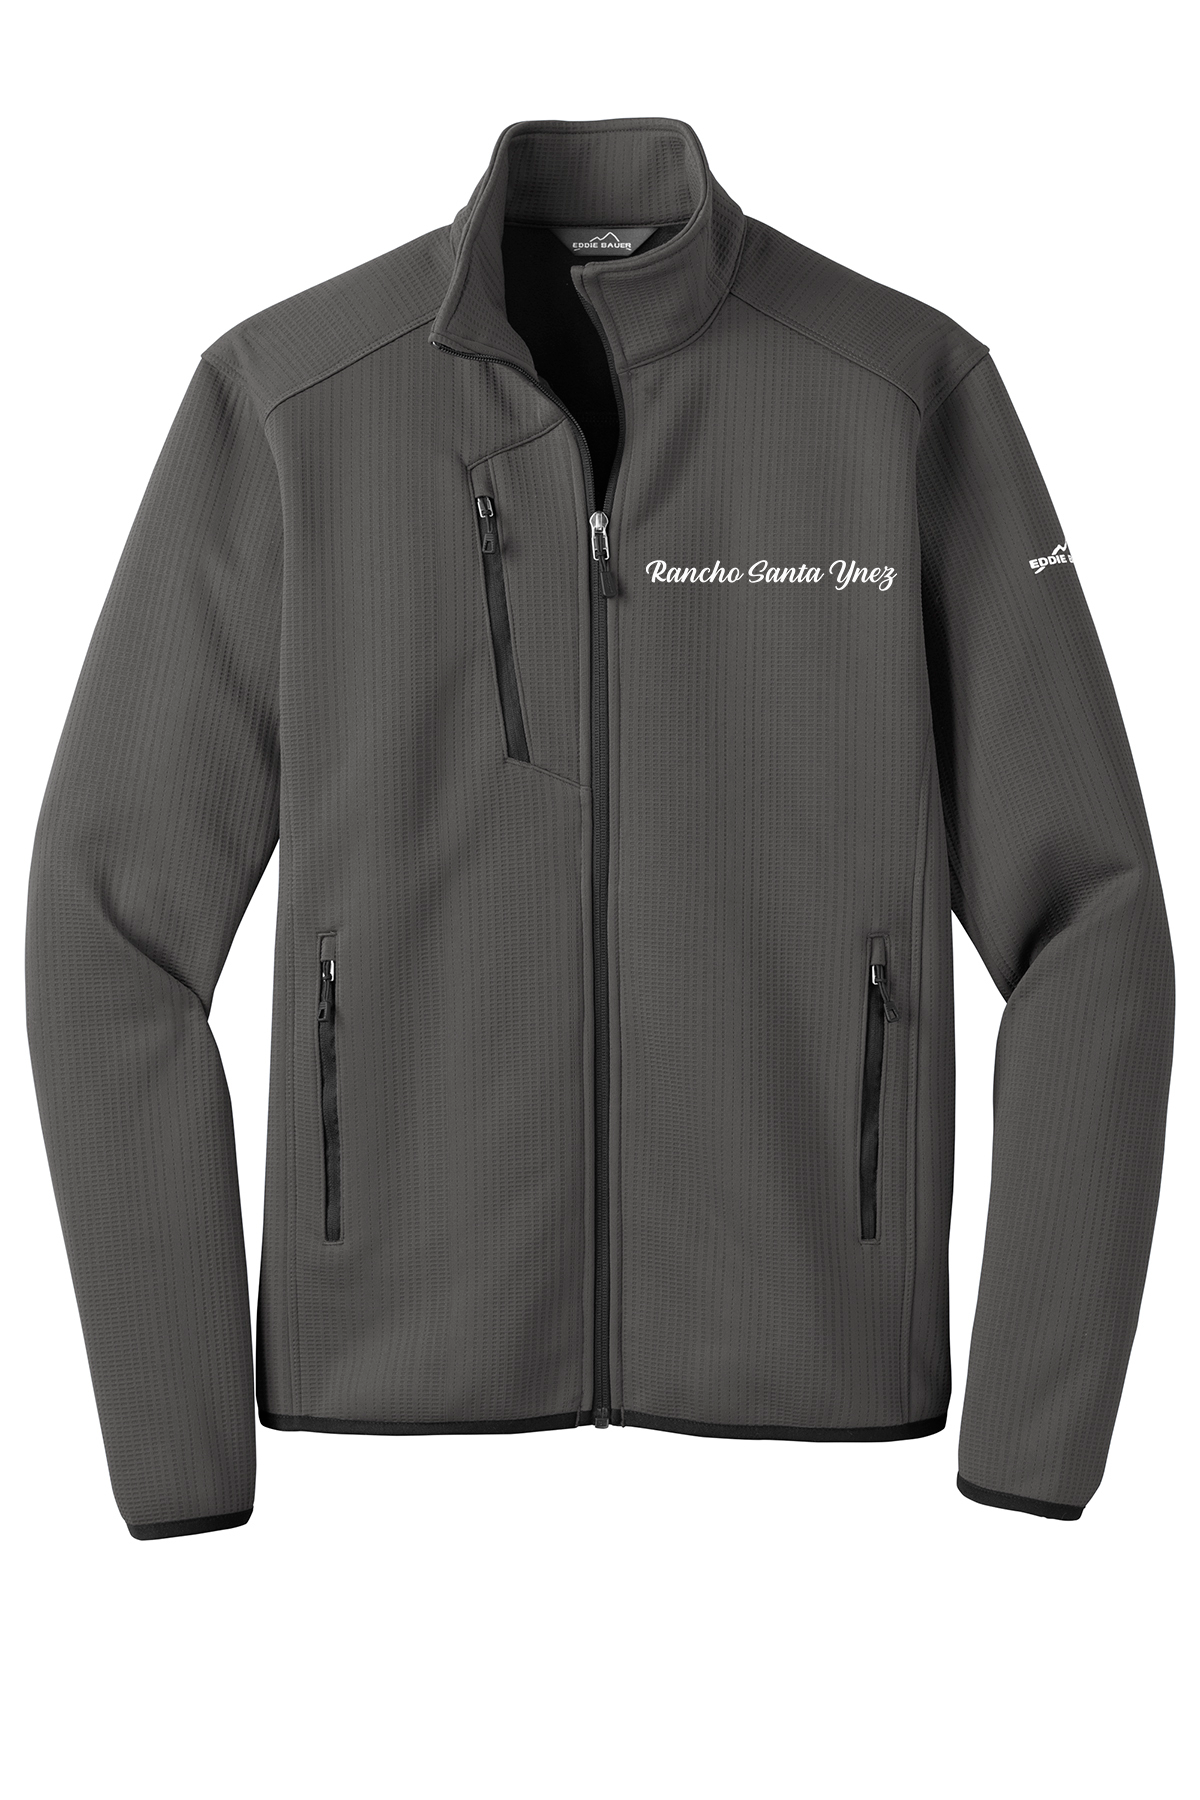 Rancho Santa Ynez - Mens - Eddie Bauer ® Dash Full-Zip Fleece Jacket